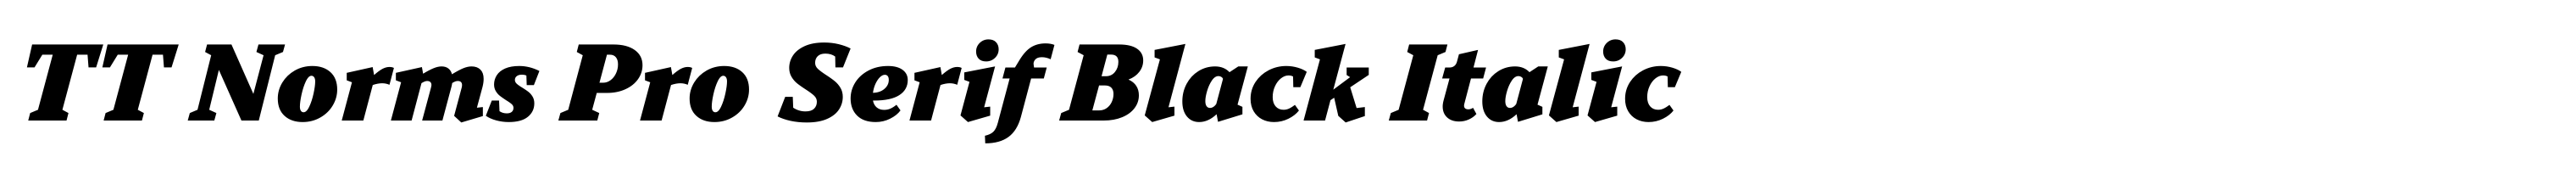 TT Norms Pro Serif Black Italic